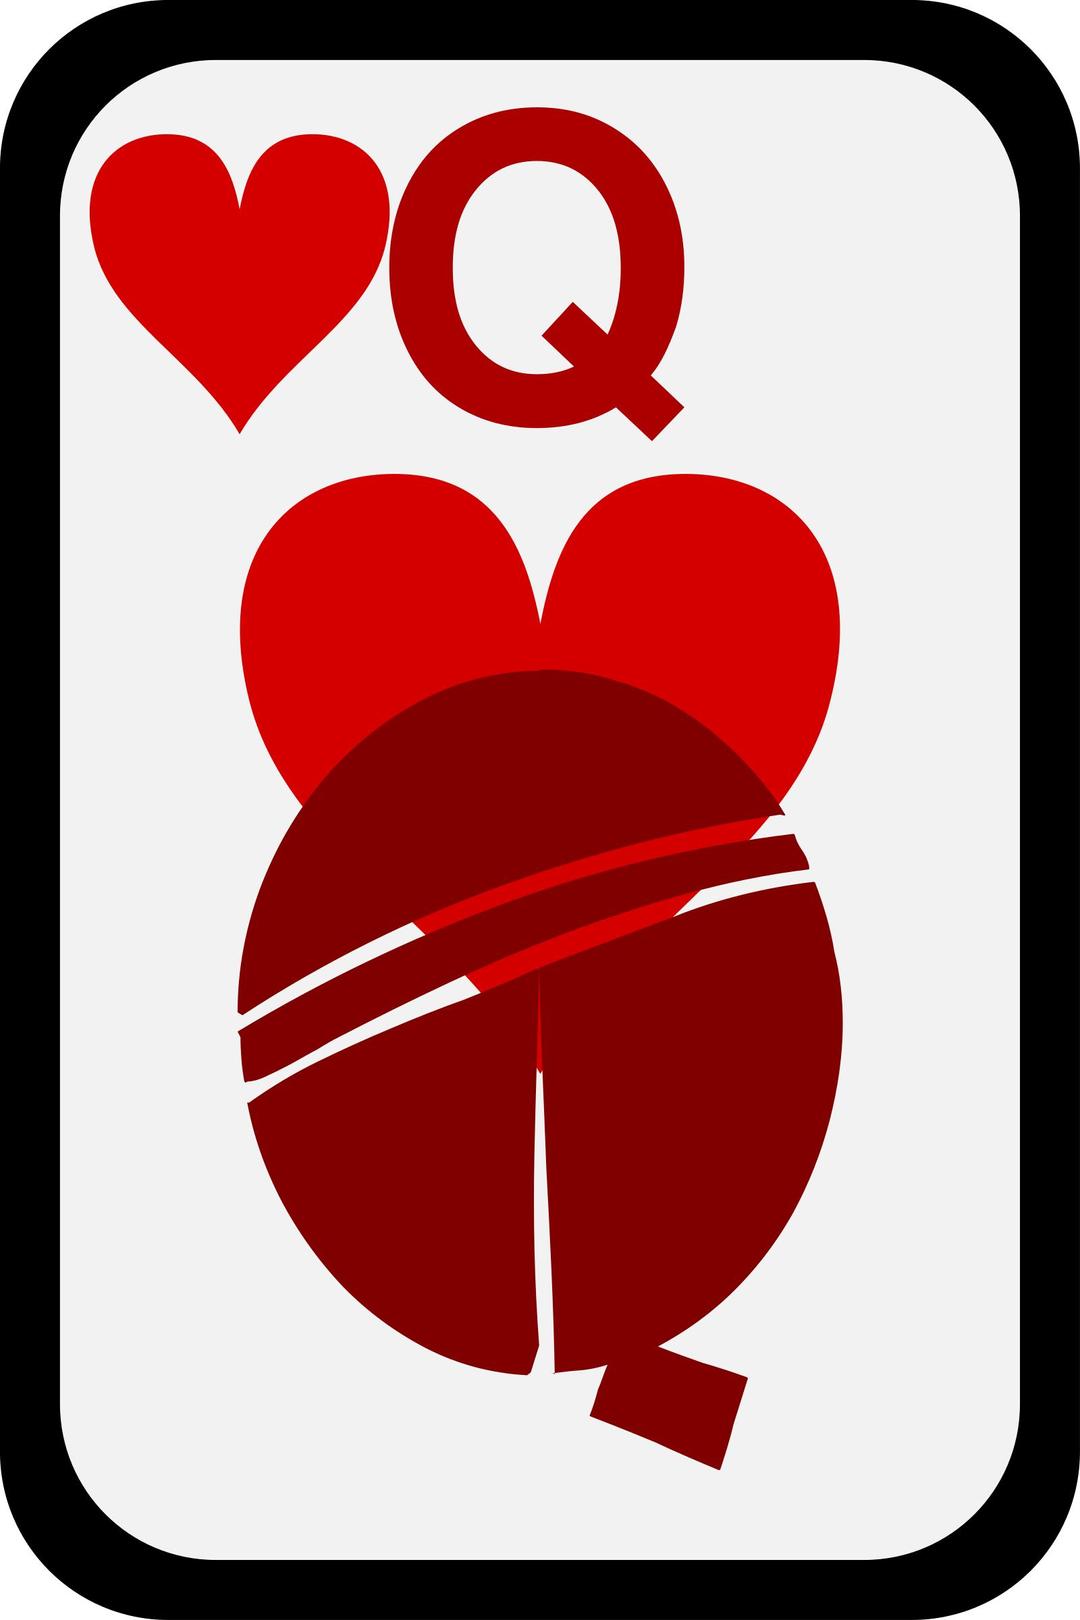 Queen of Hearts png transparent